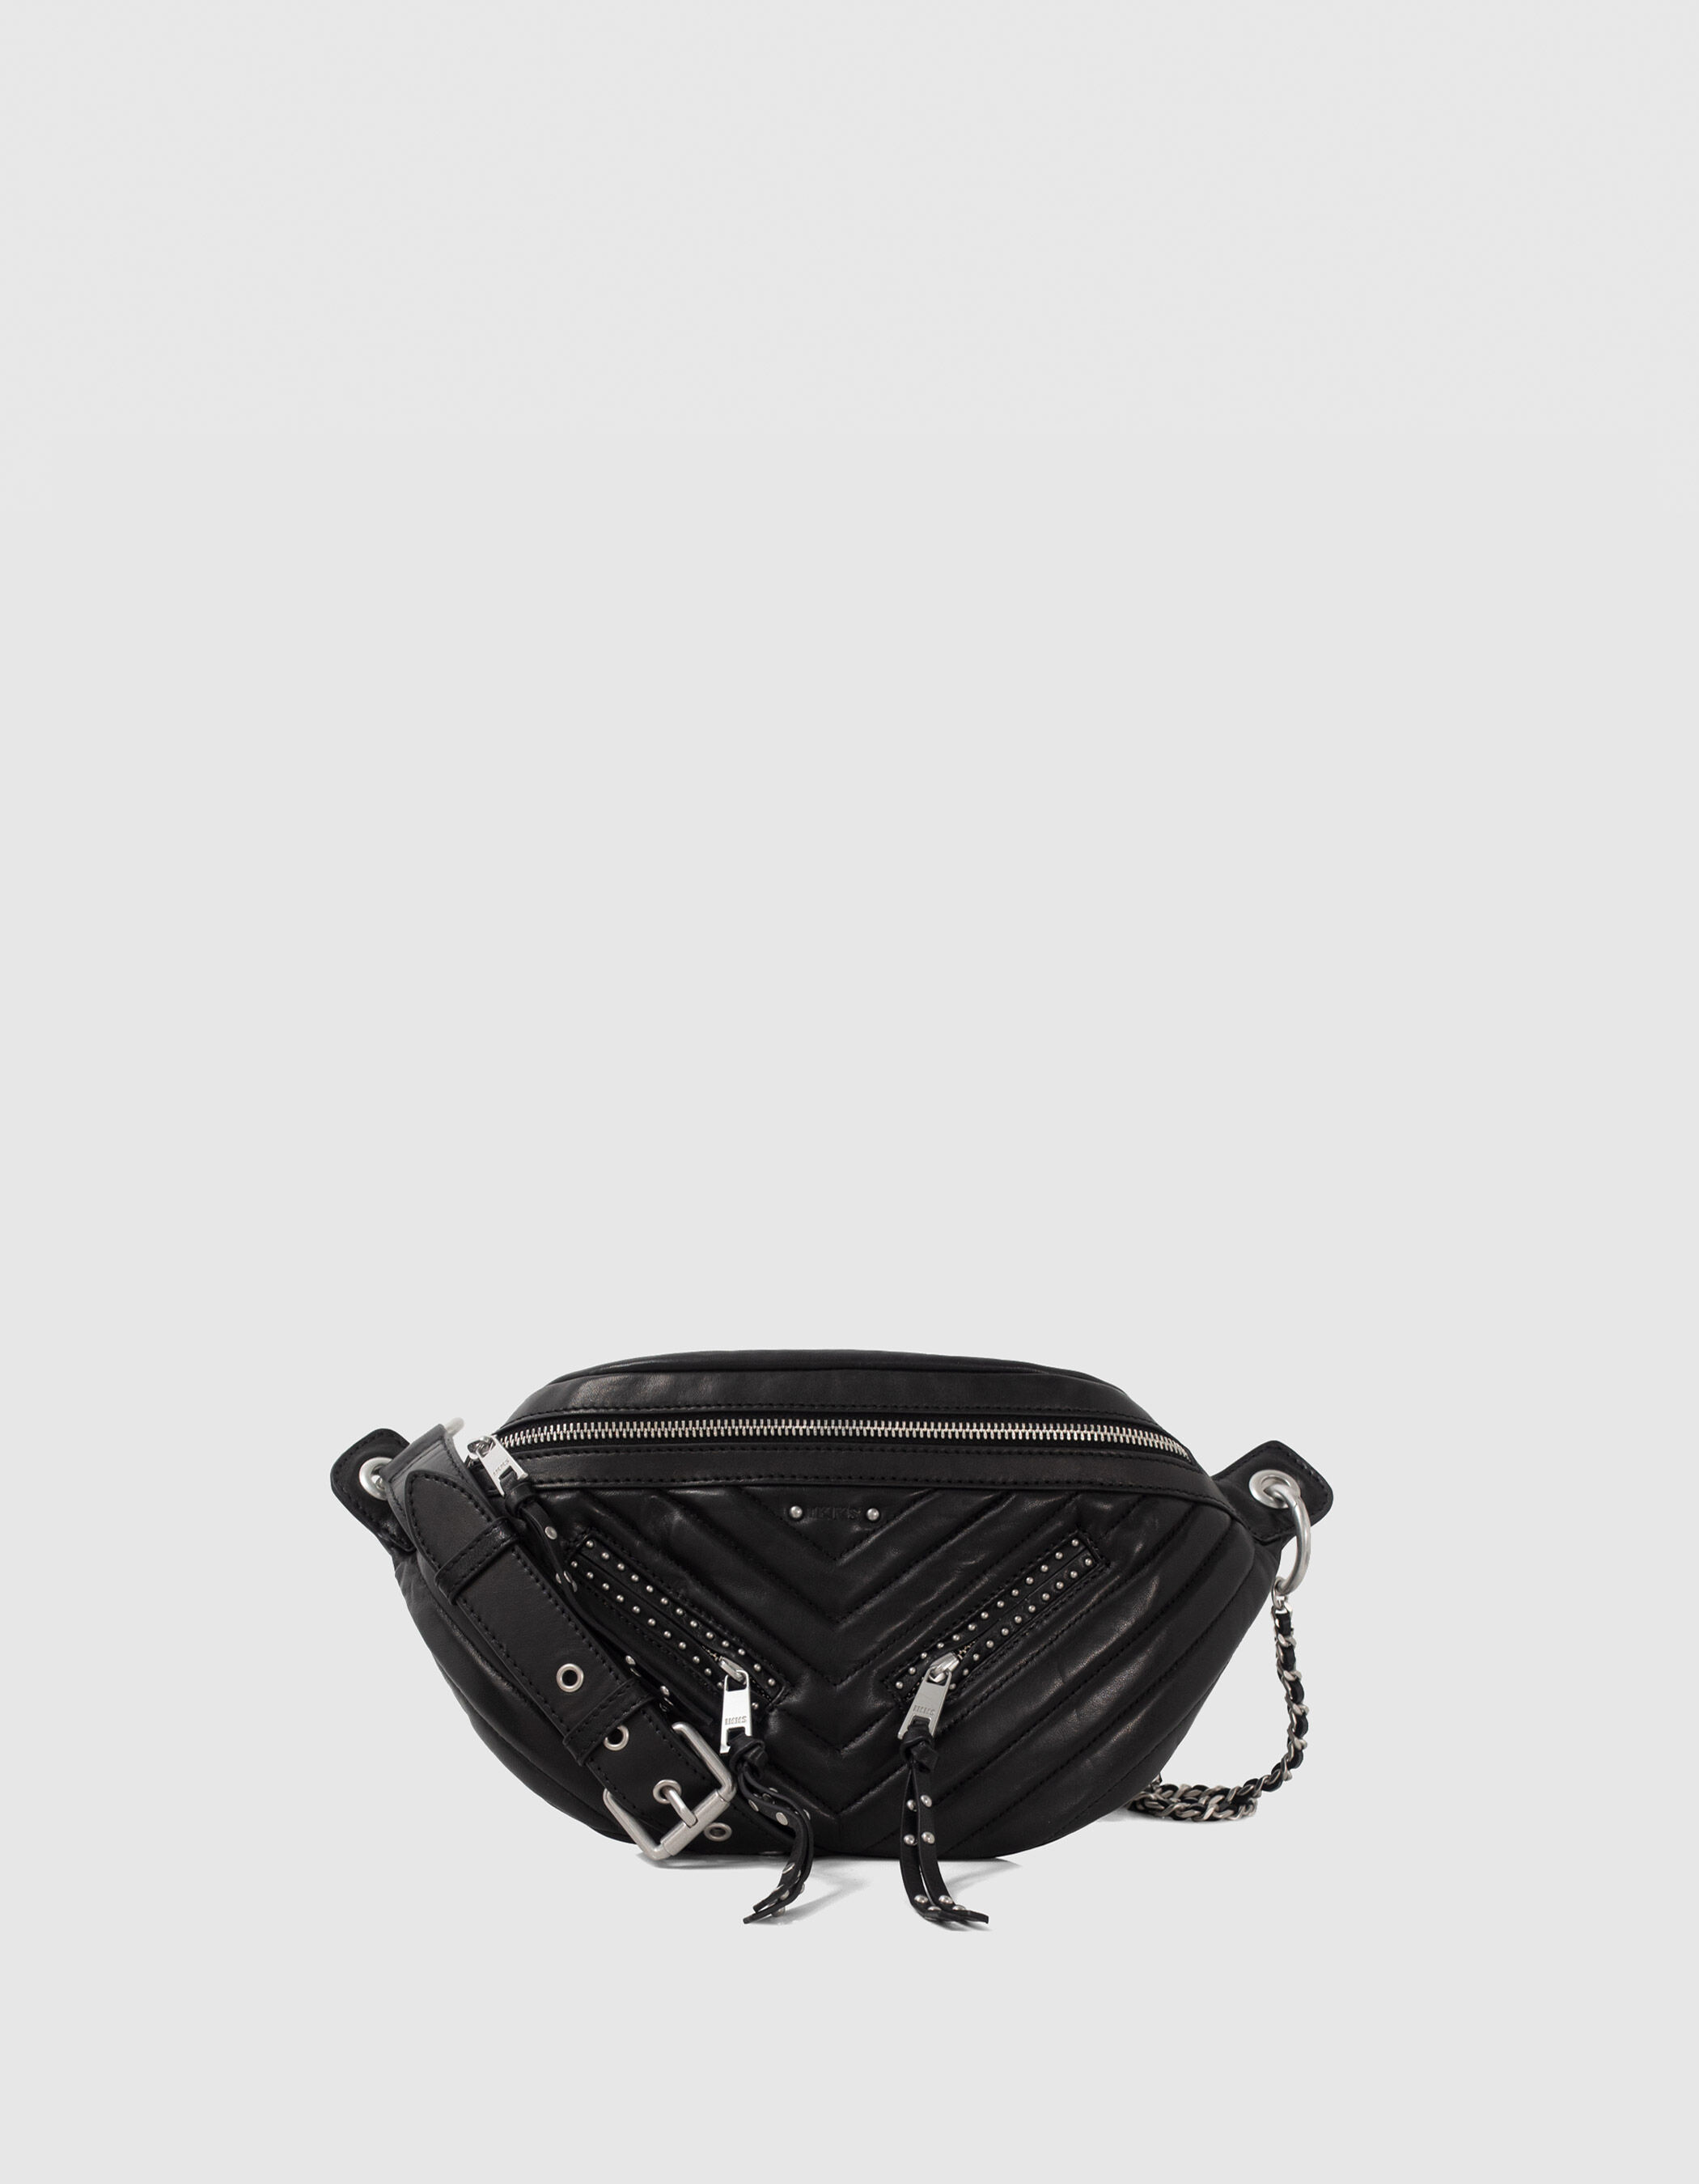 Women's black leather studded 1440 Rock waist bag